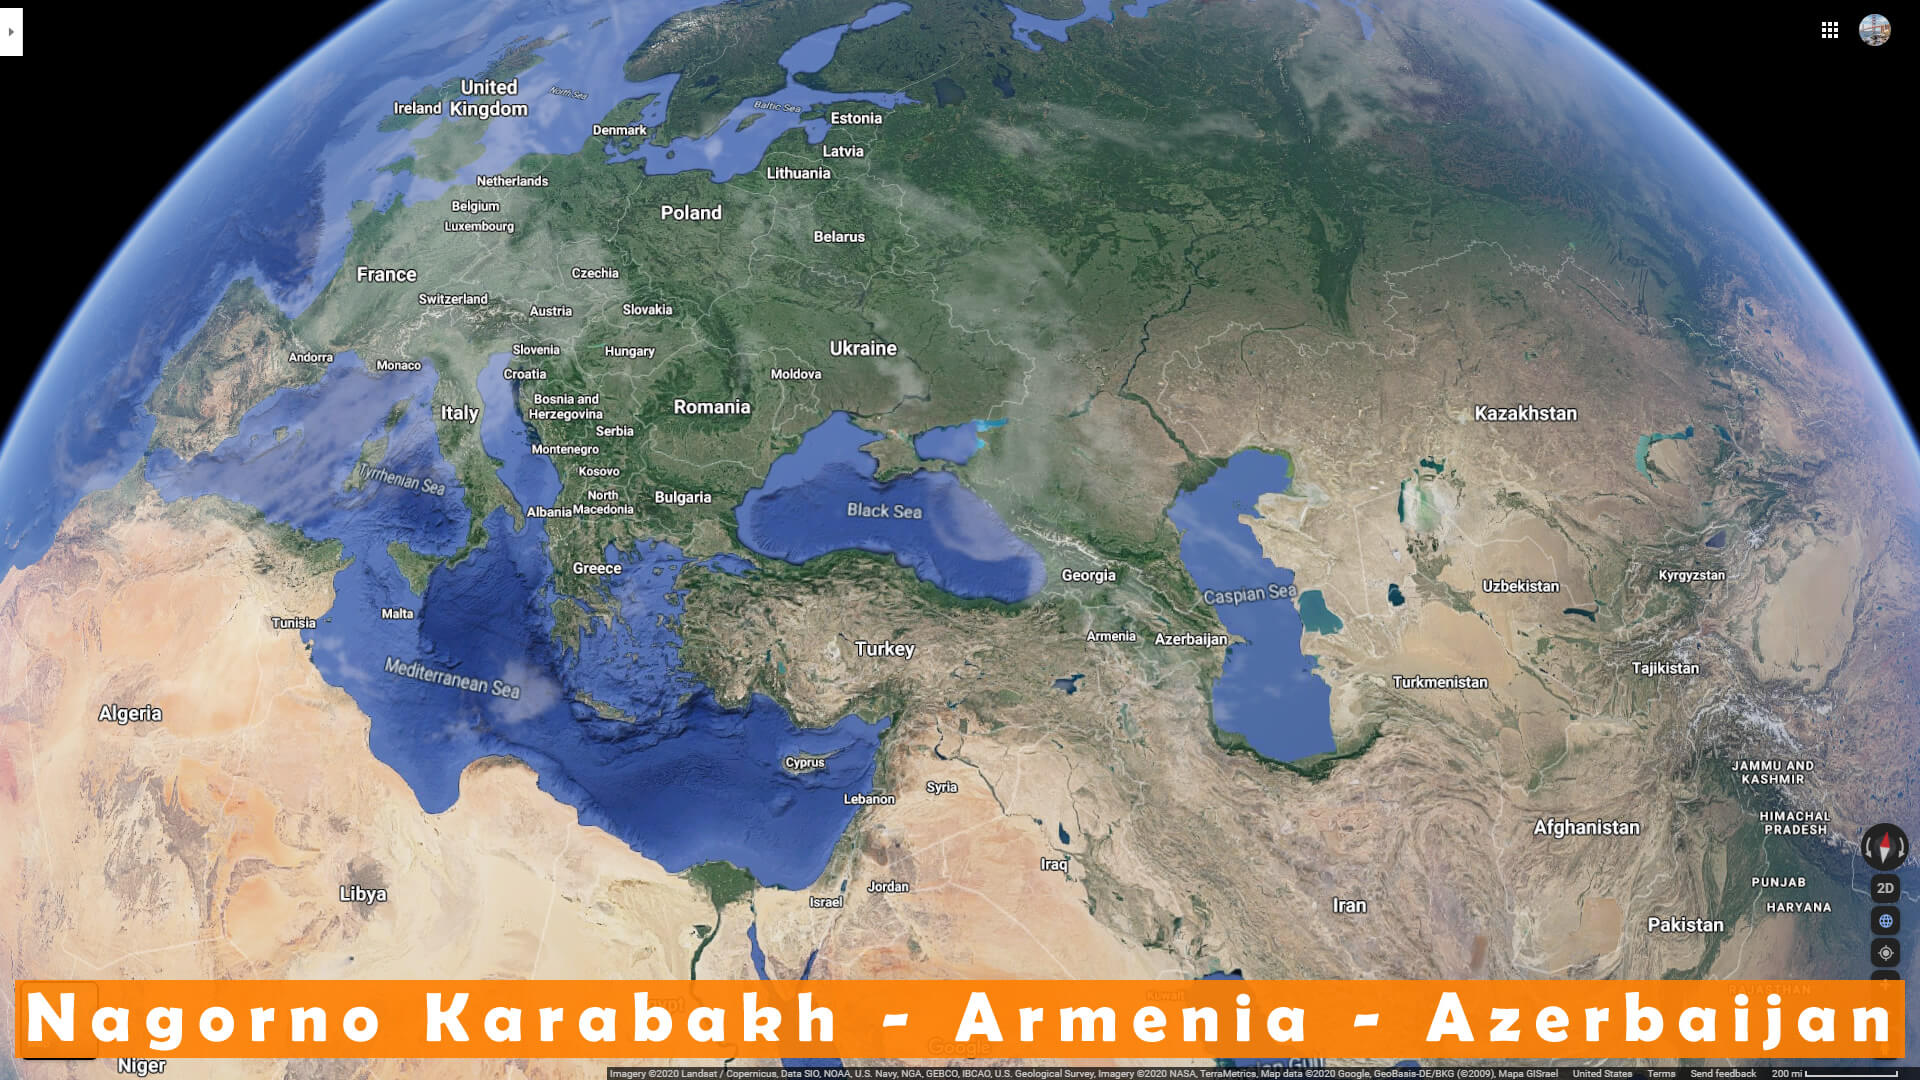 Nagorno Karabakh Map - Armenia Azerbaijan